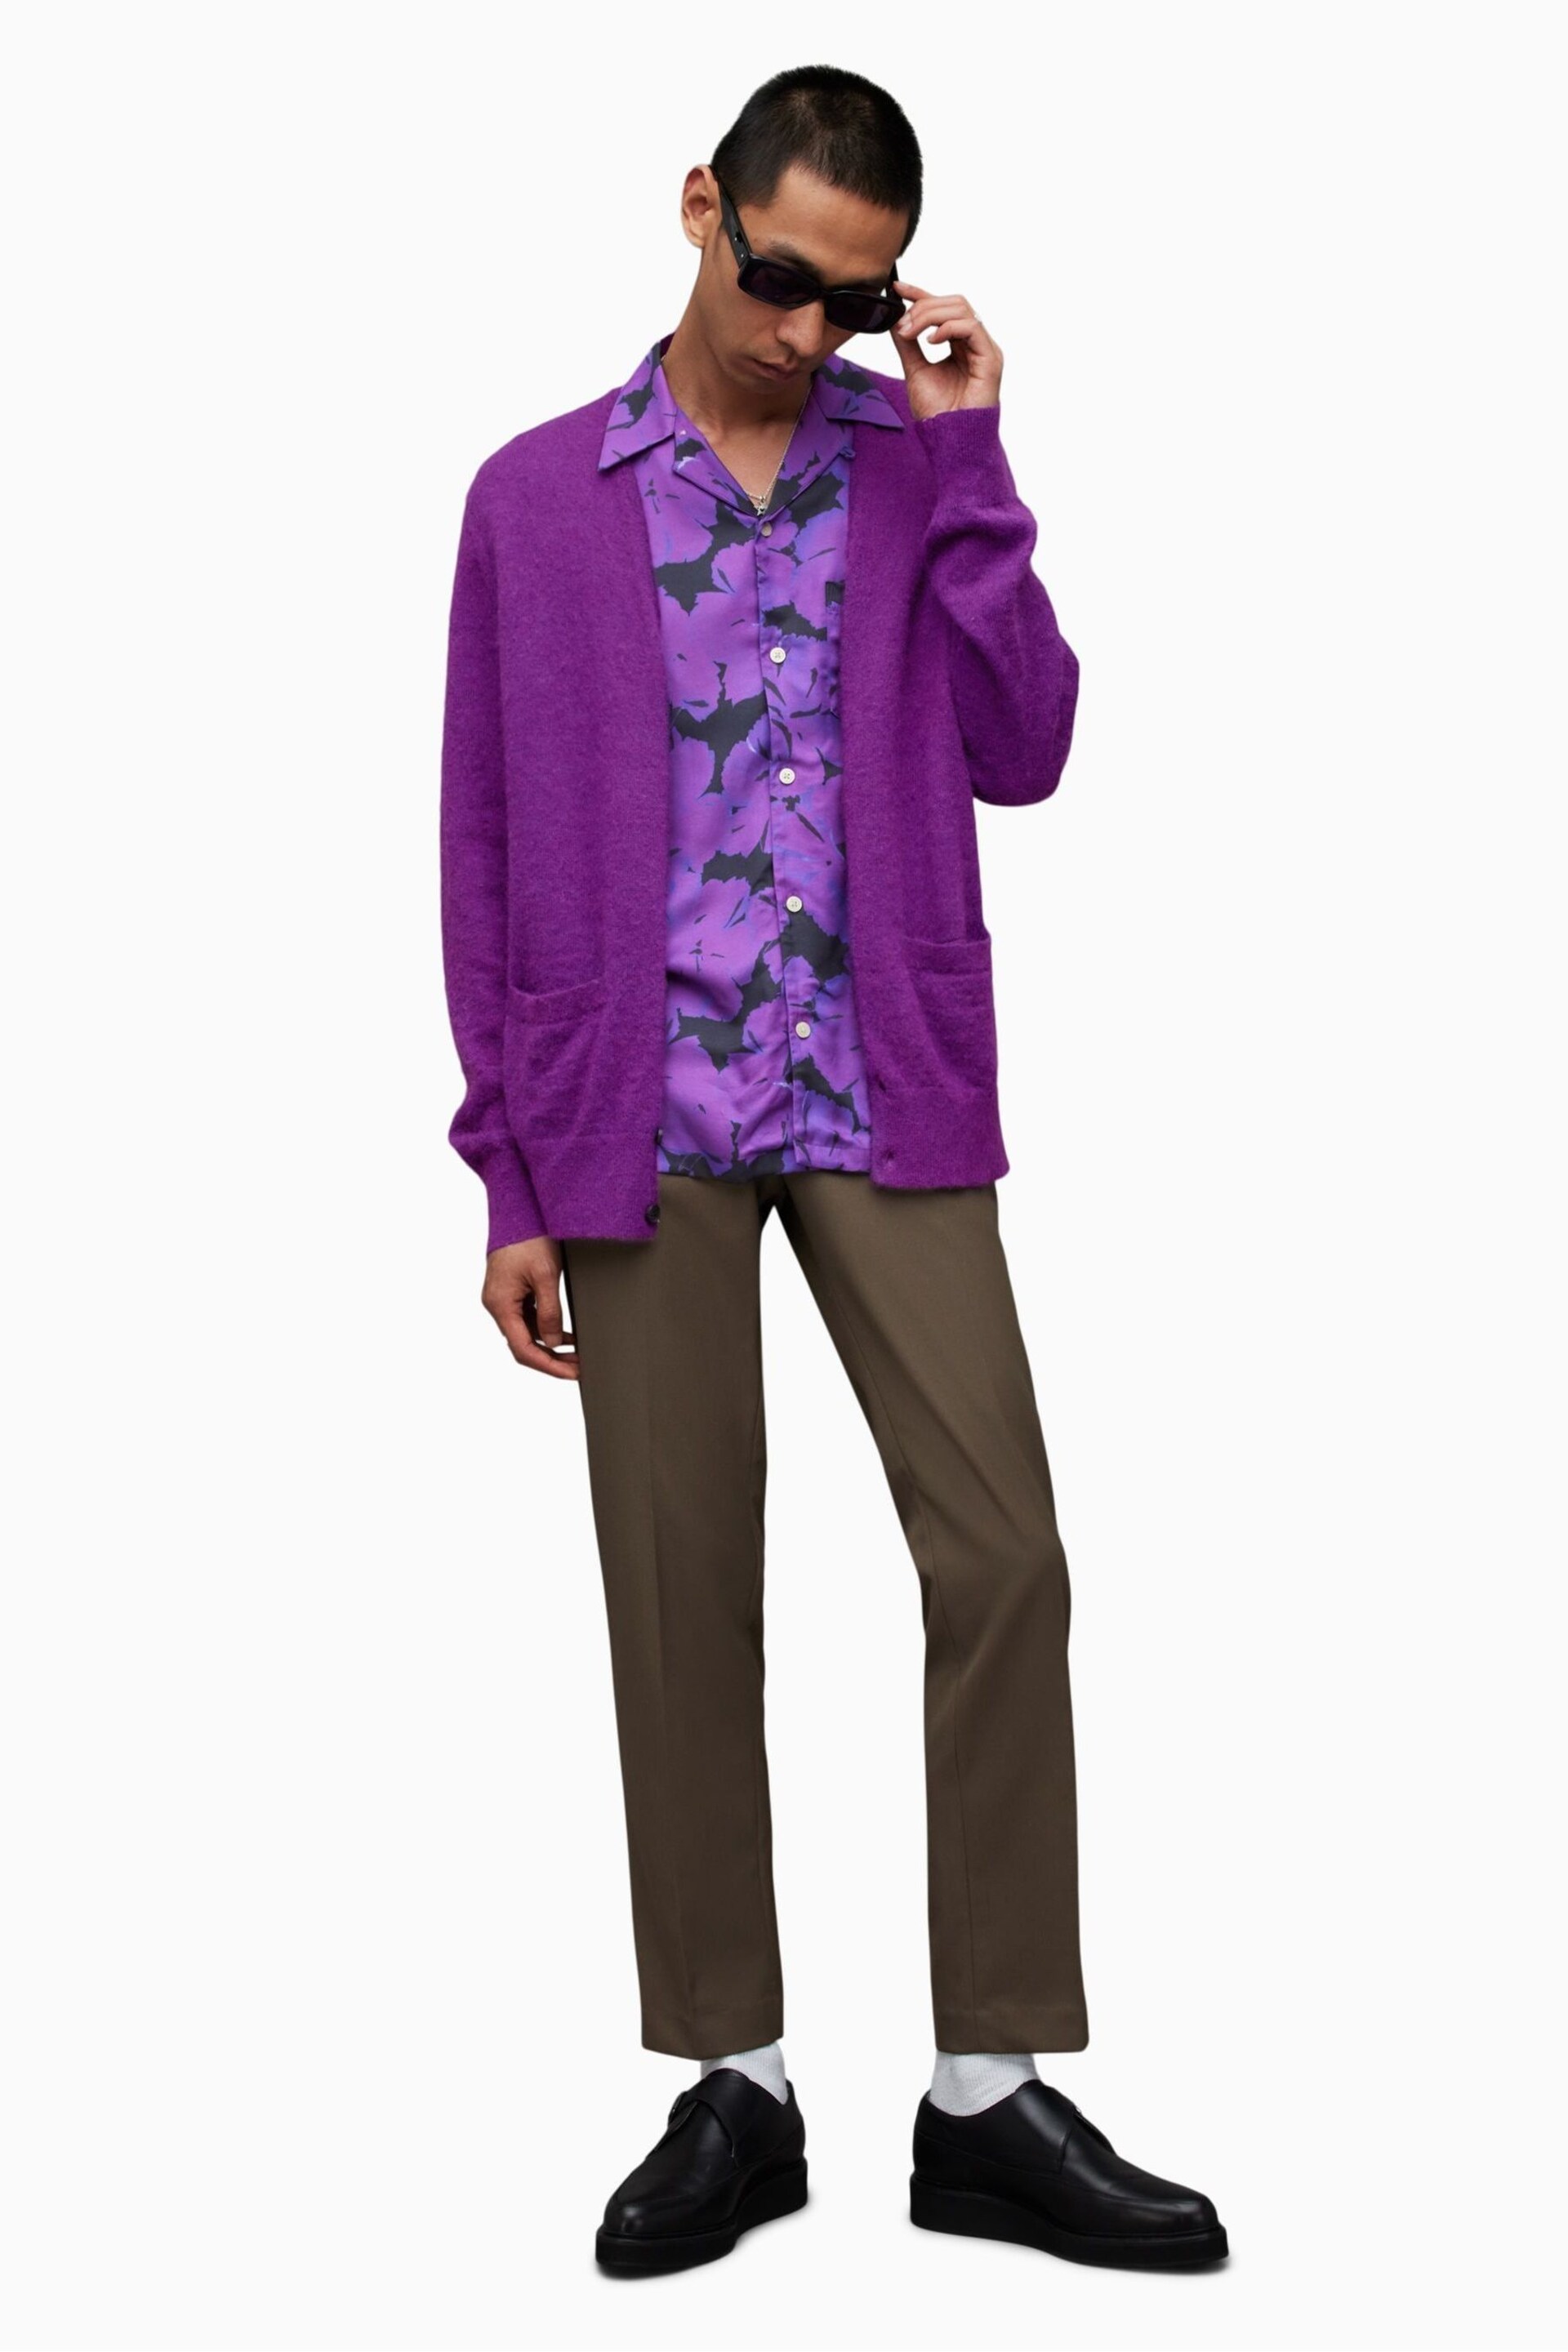 AllSaints Purple Kennedy Cardigan - Image 4 of 8